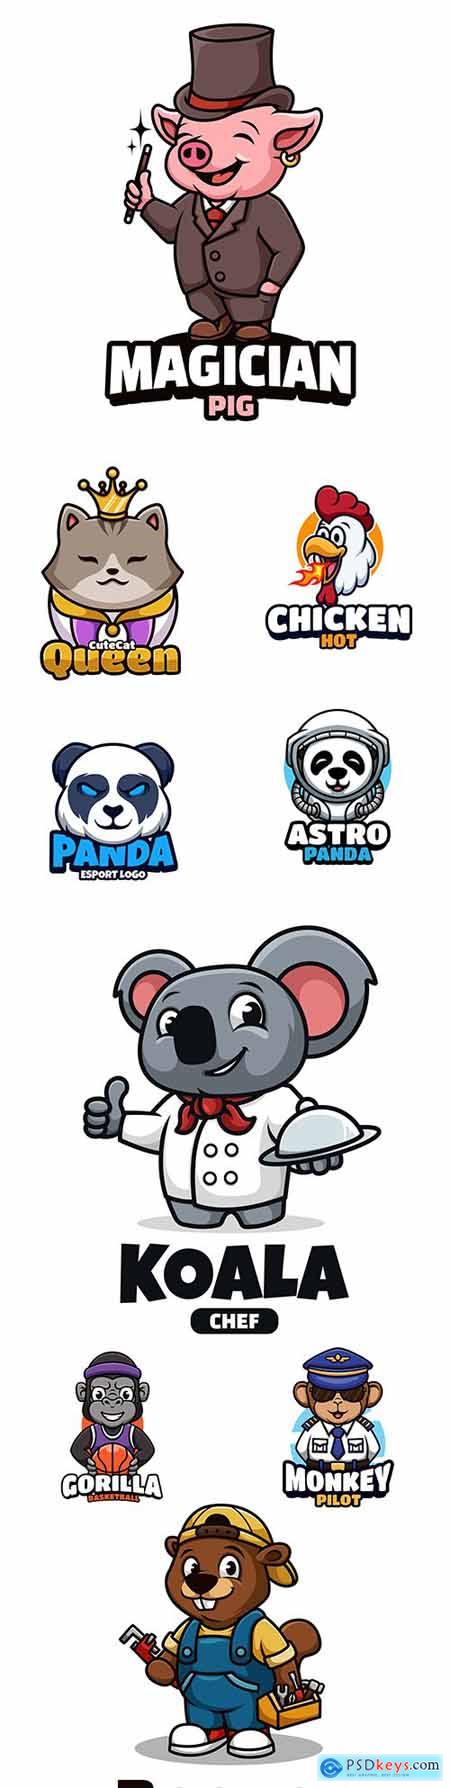 Mascot emblem and brand name logos design 5